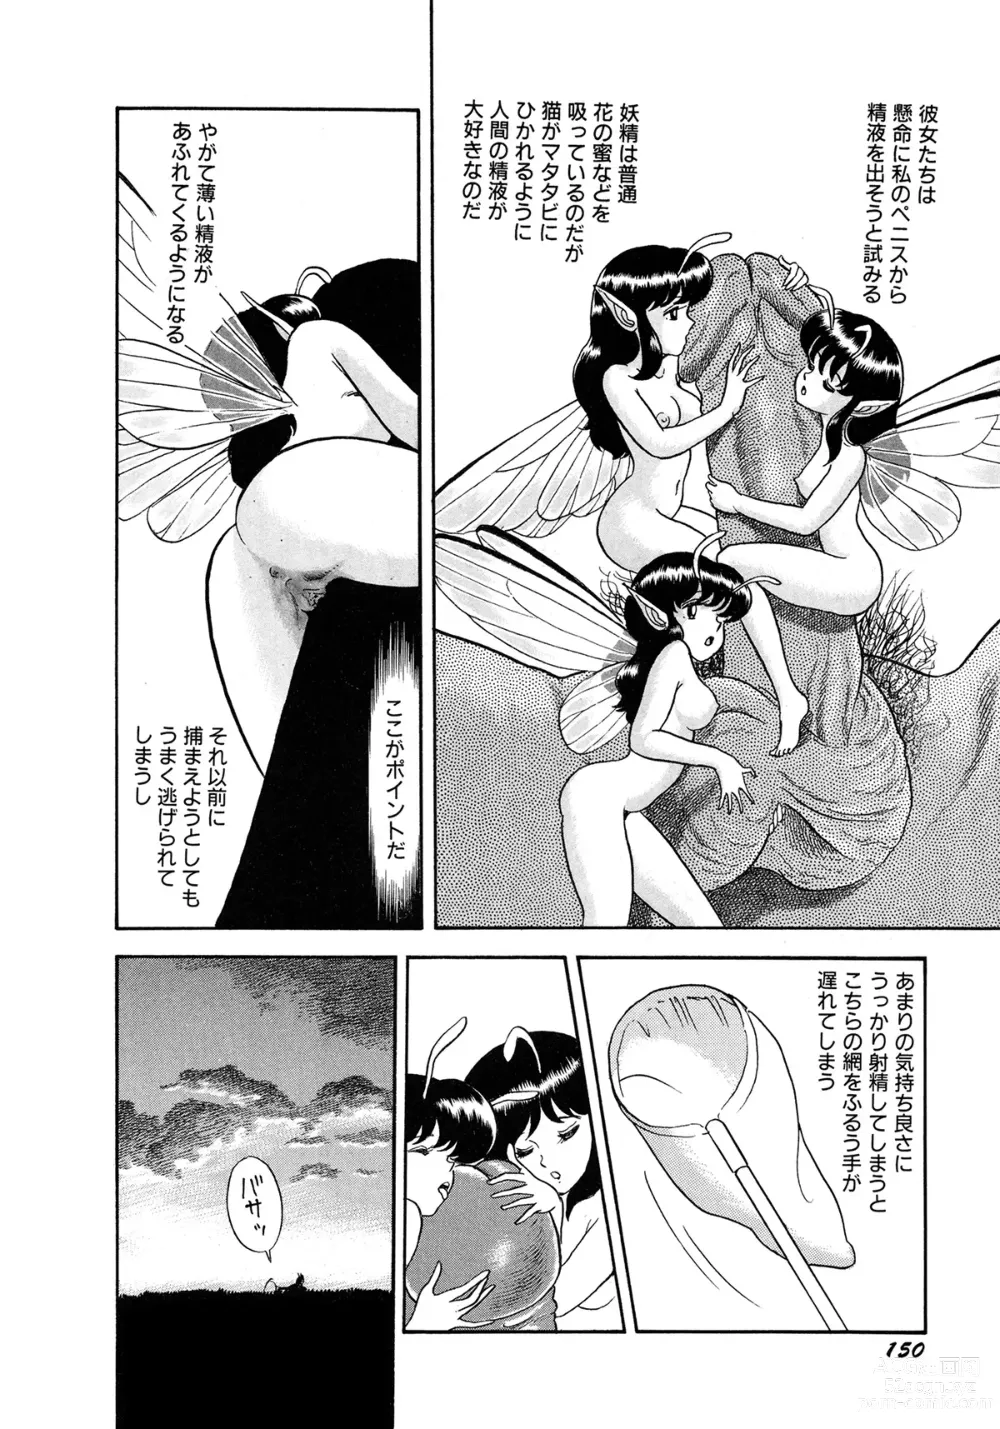 Page 153 of manga Insect Hunter